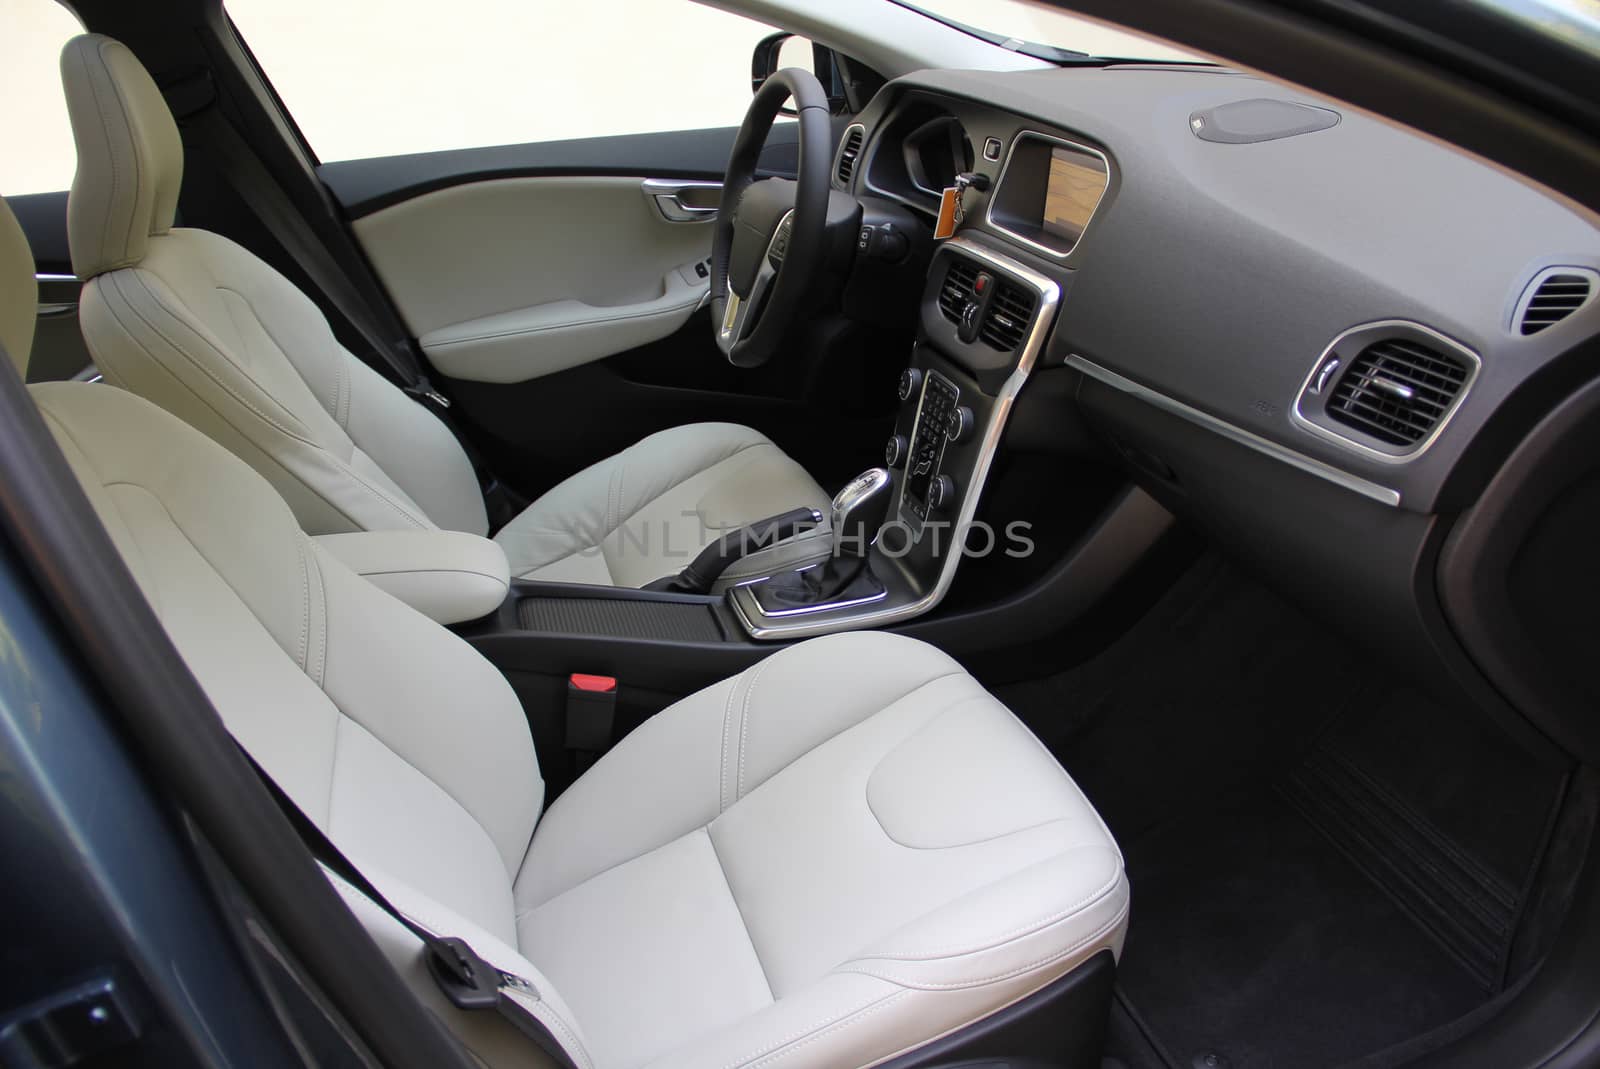 interior luxury passenger car by aselsa